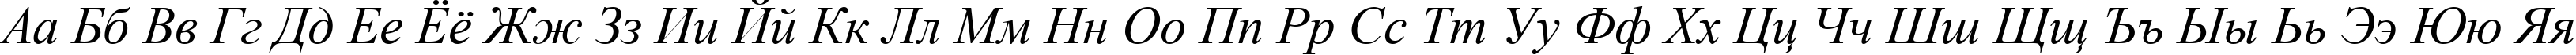 Пример написания русского алфавита шрифтом Times New Roman Italic